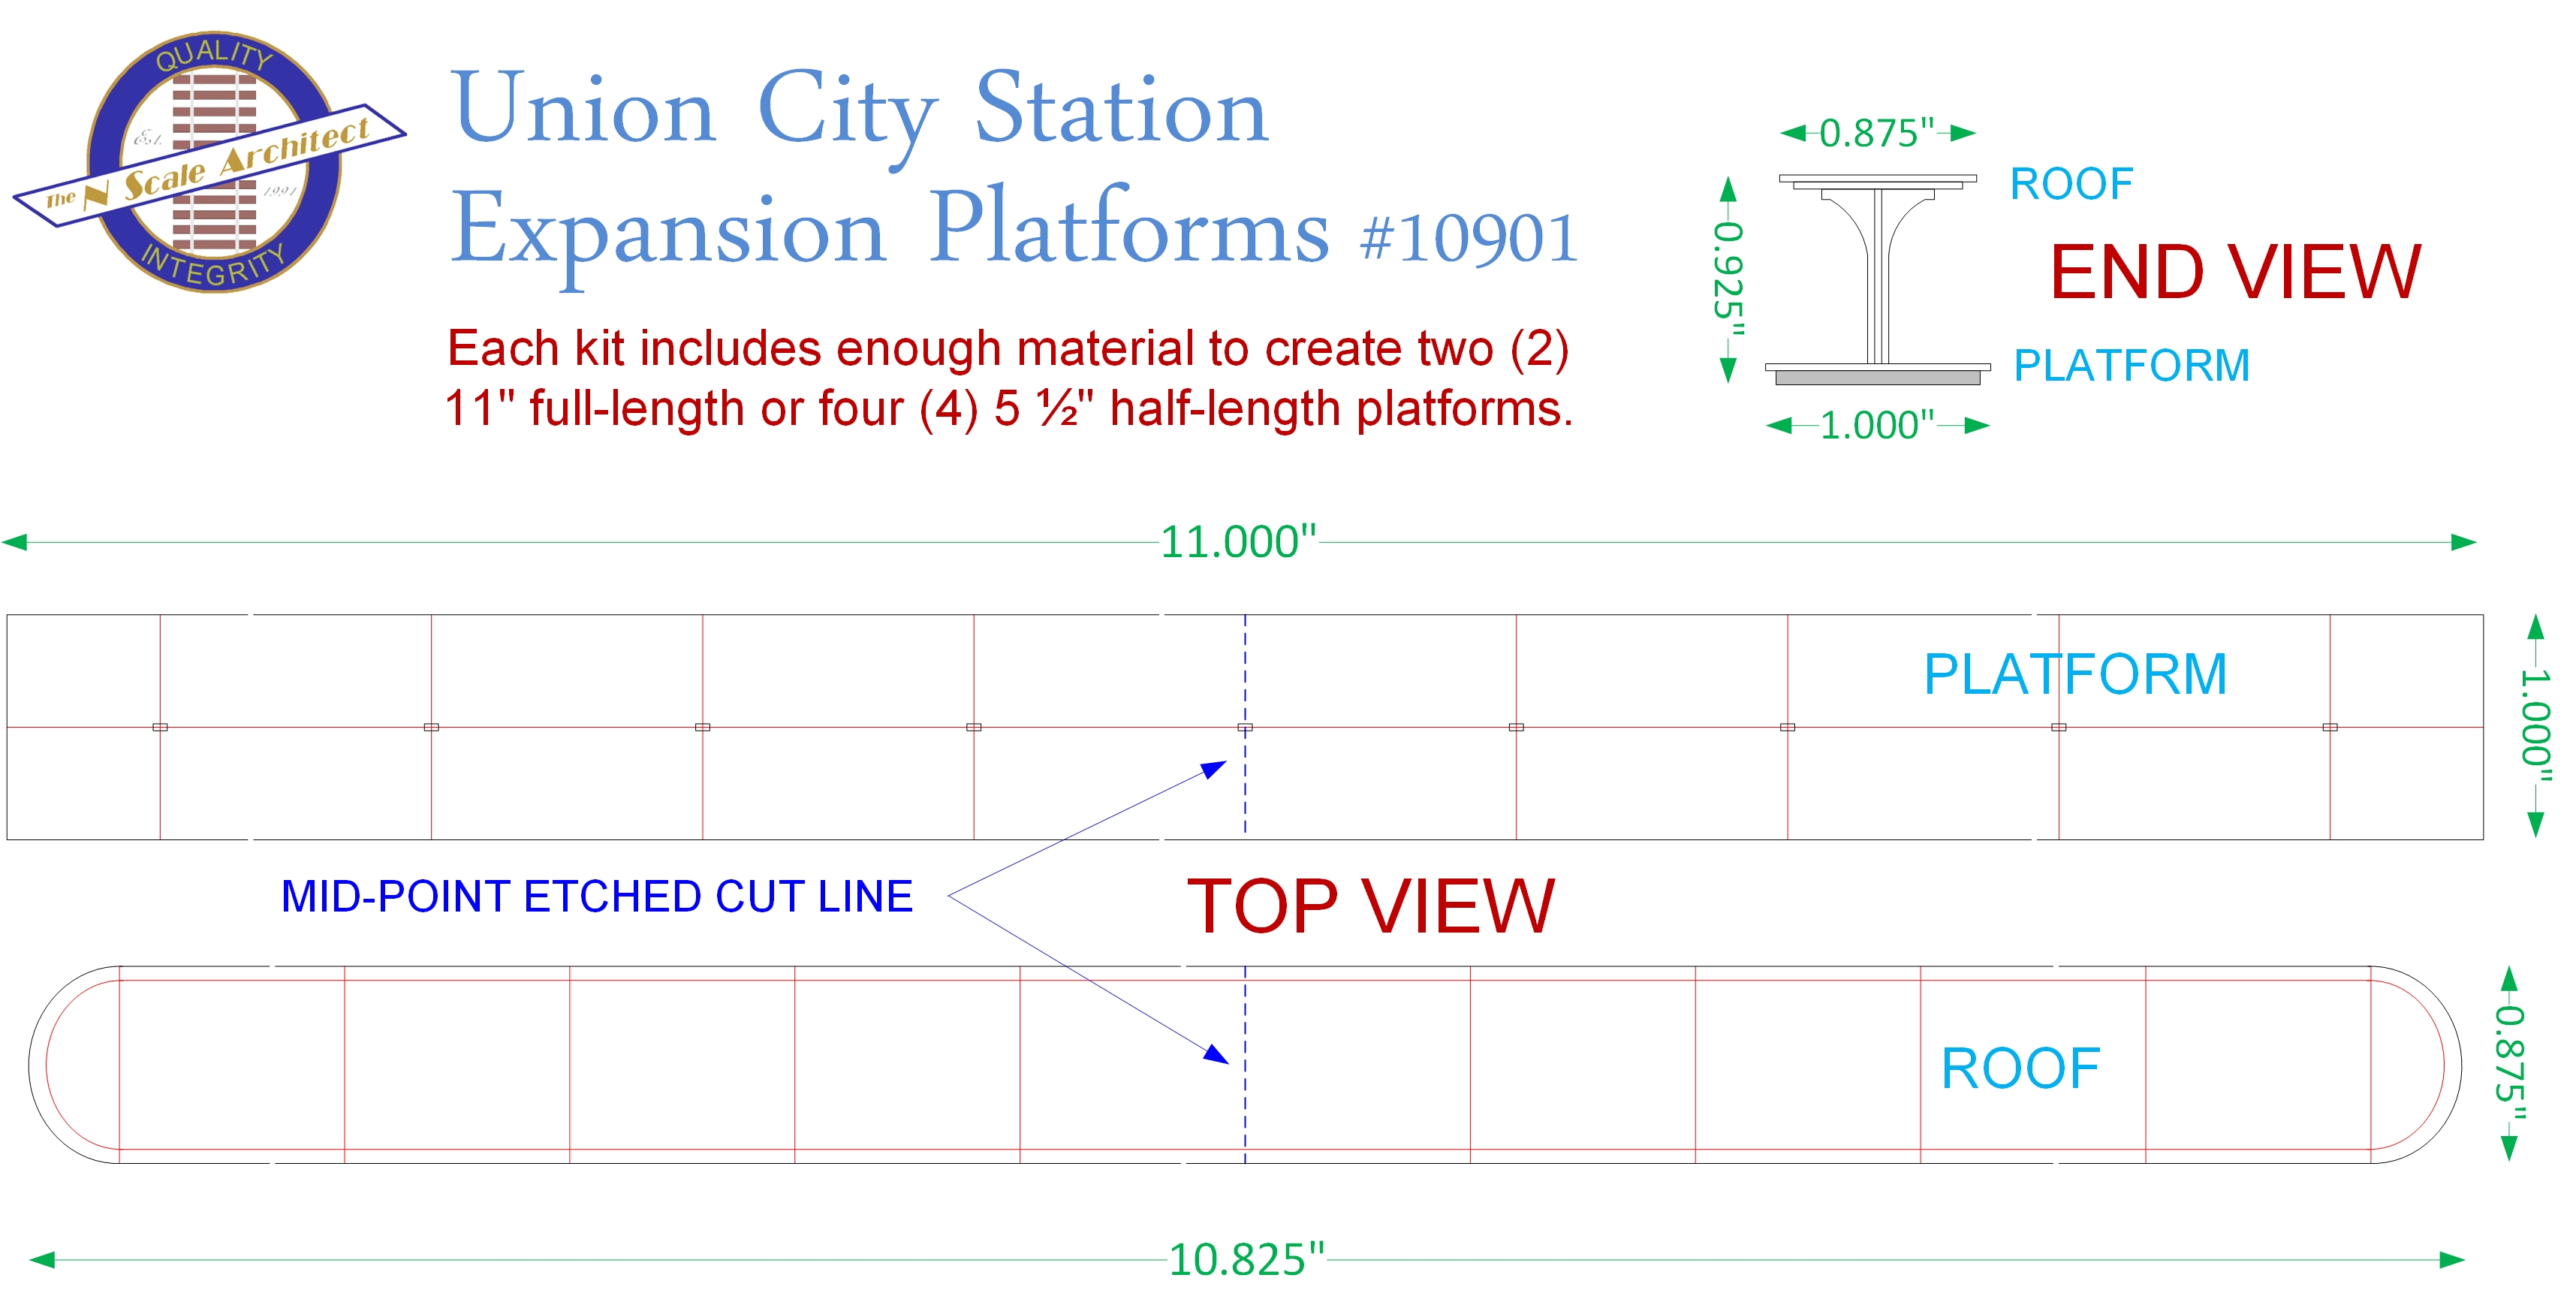 Union City Station Expansion Platforms - Basic Dimensions